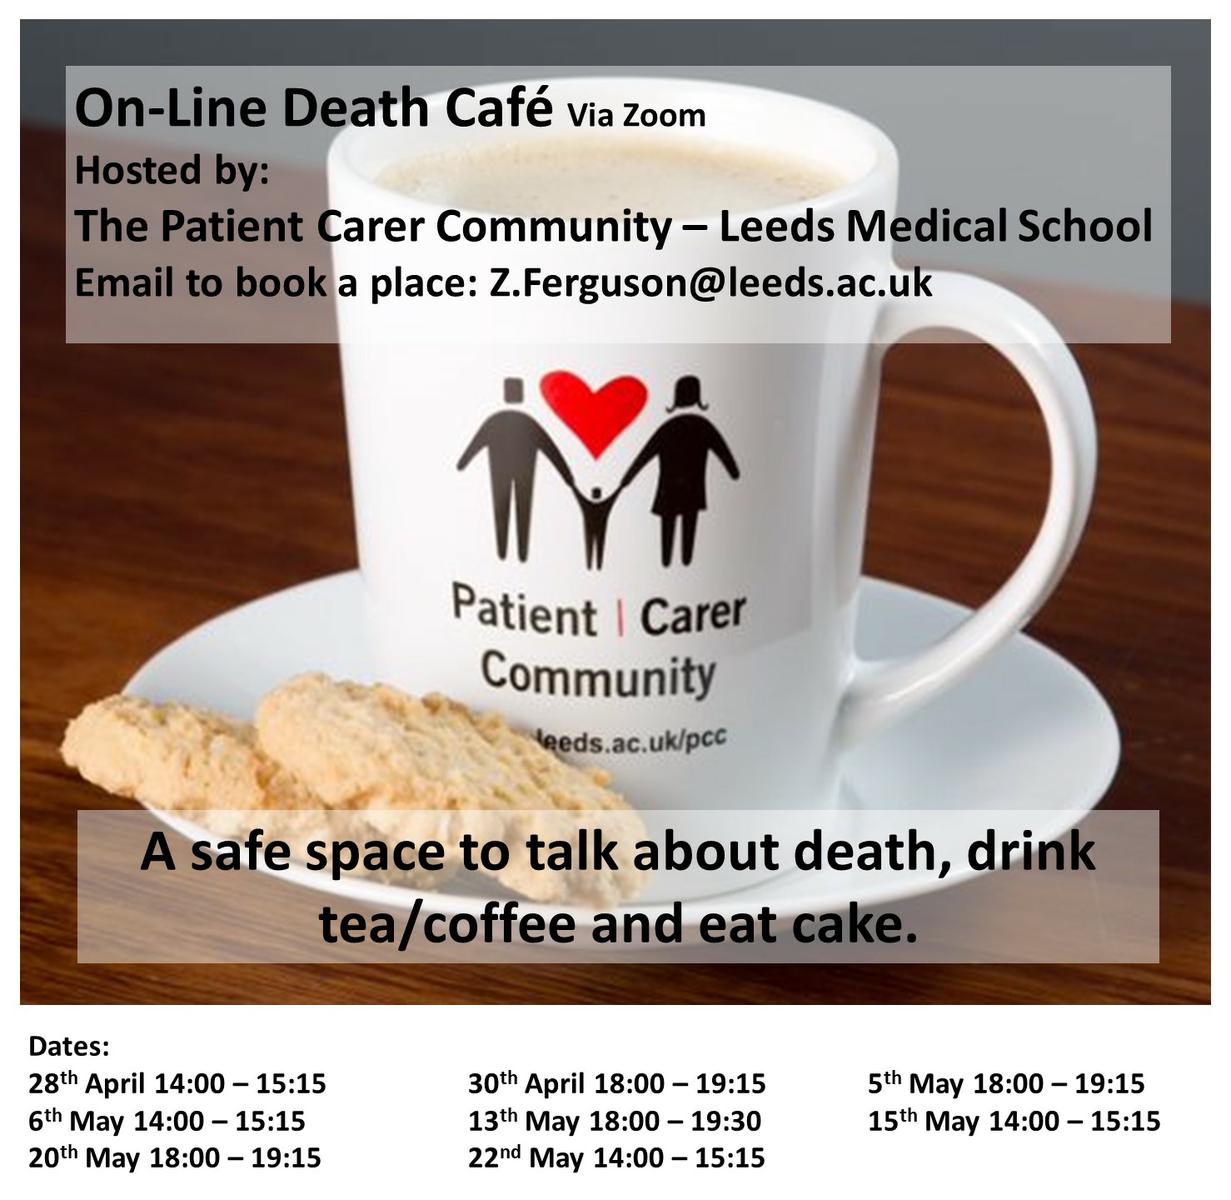 On-line Death Cafe - West Yorkshire 30th April